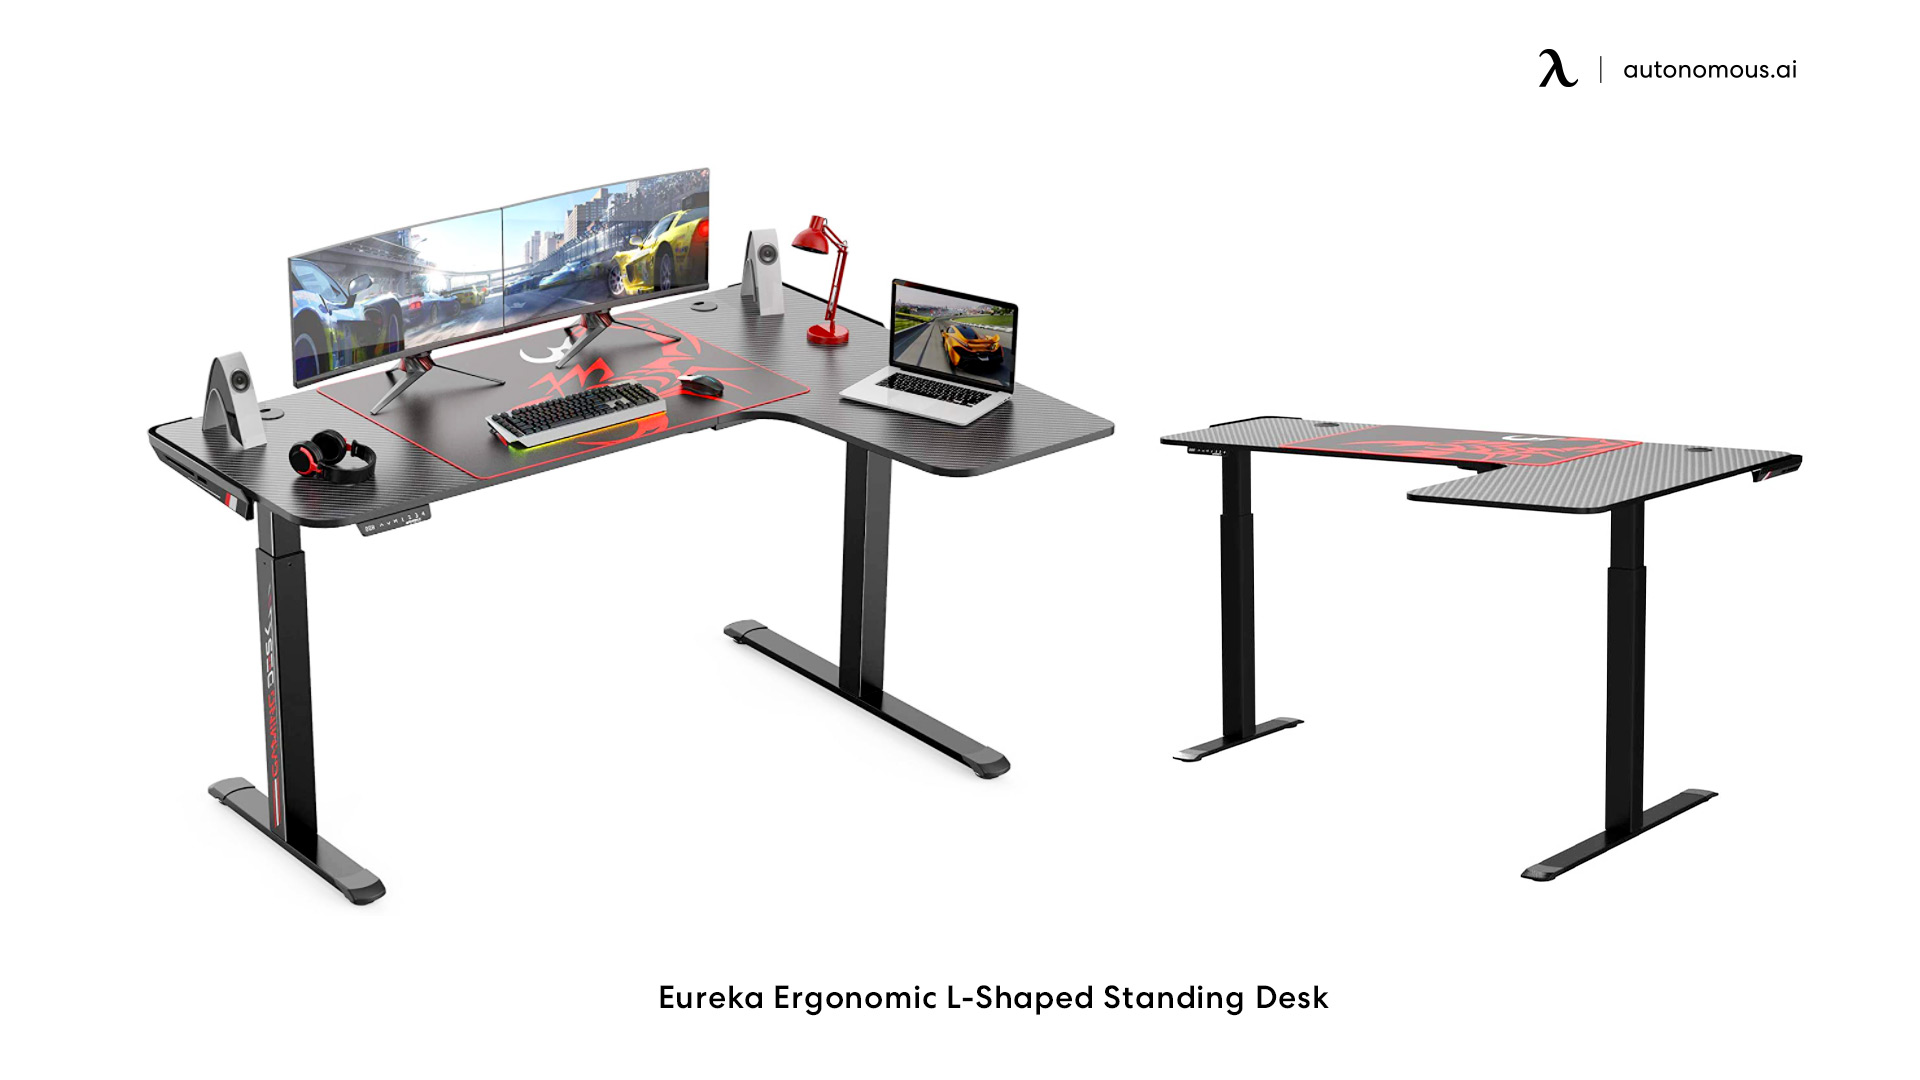 L60 gaming desk from Eureka Ergonomic